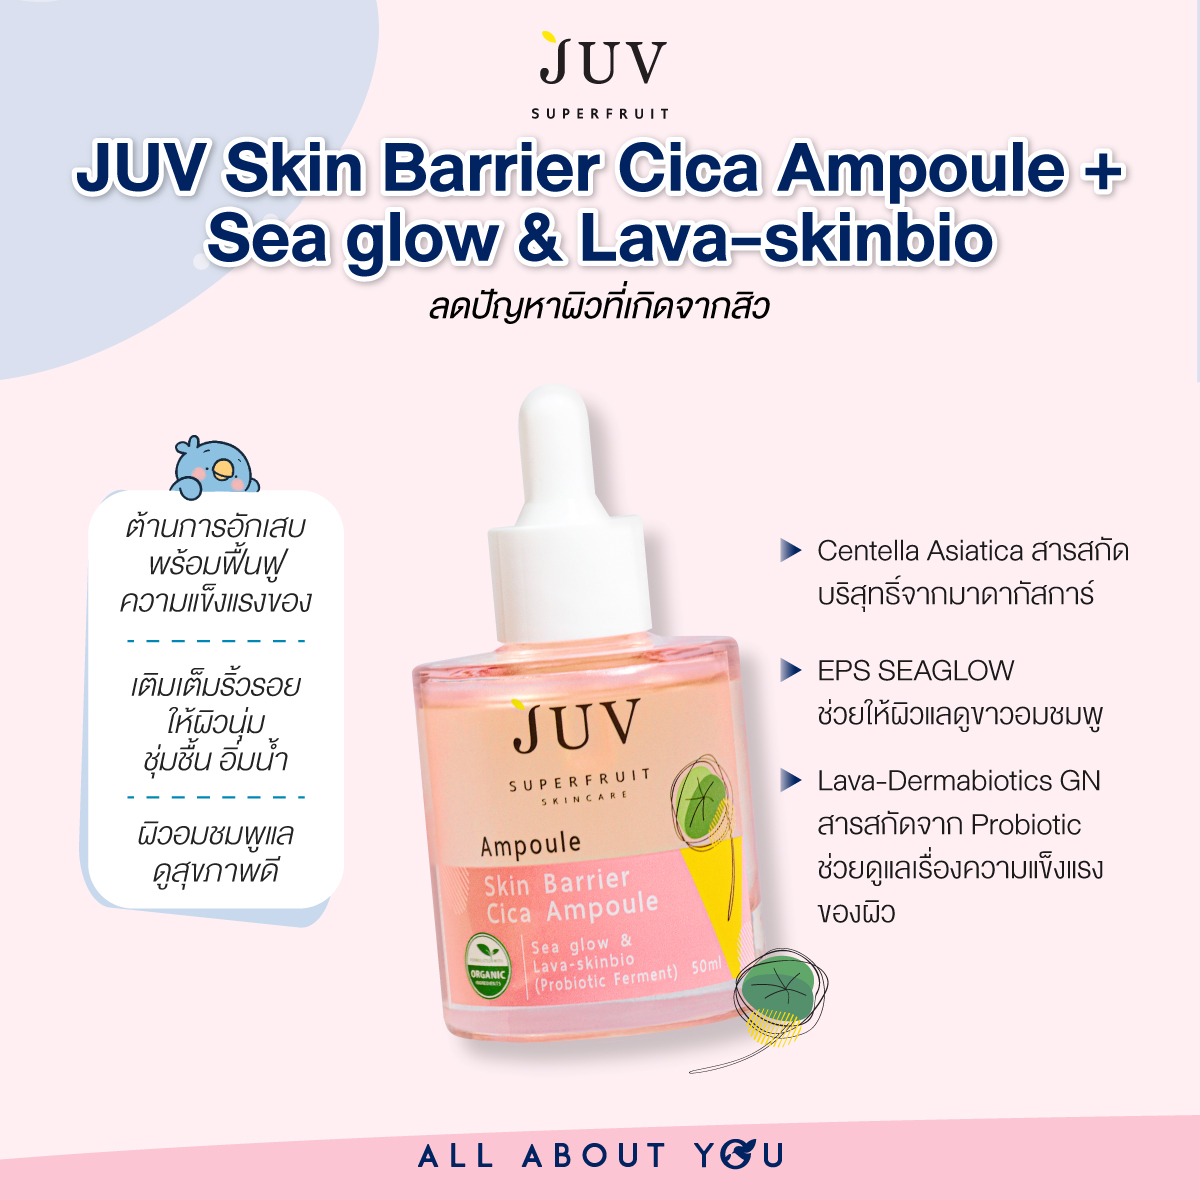 JUV Skin Barrier Cica Ampoule + Sea glow & Lava-skinbio